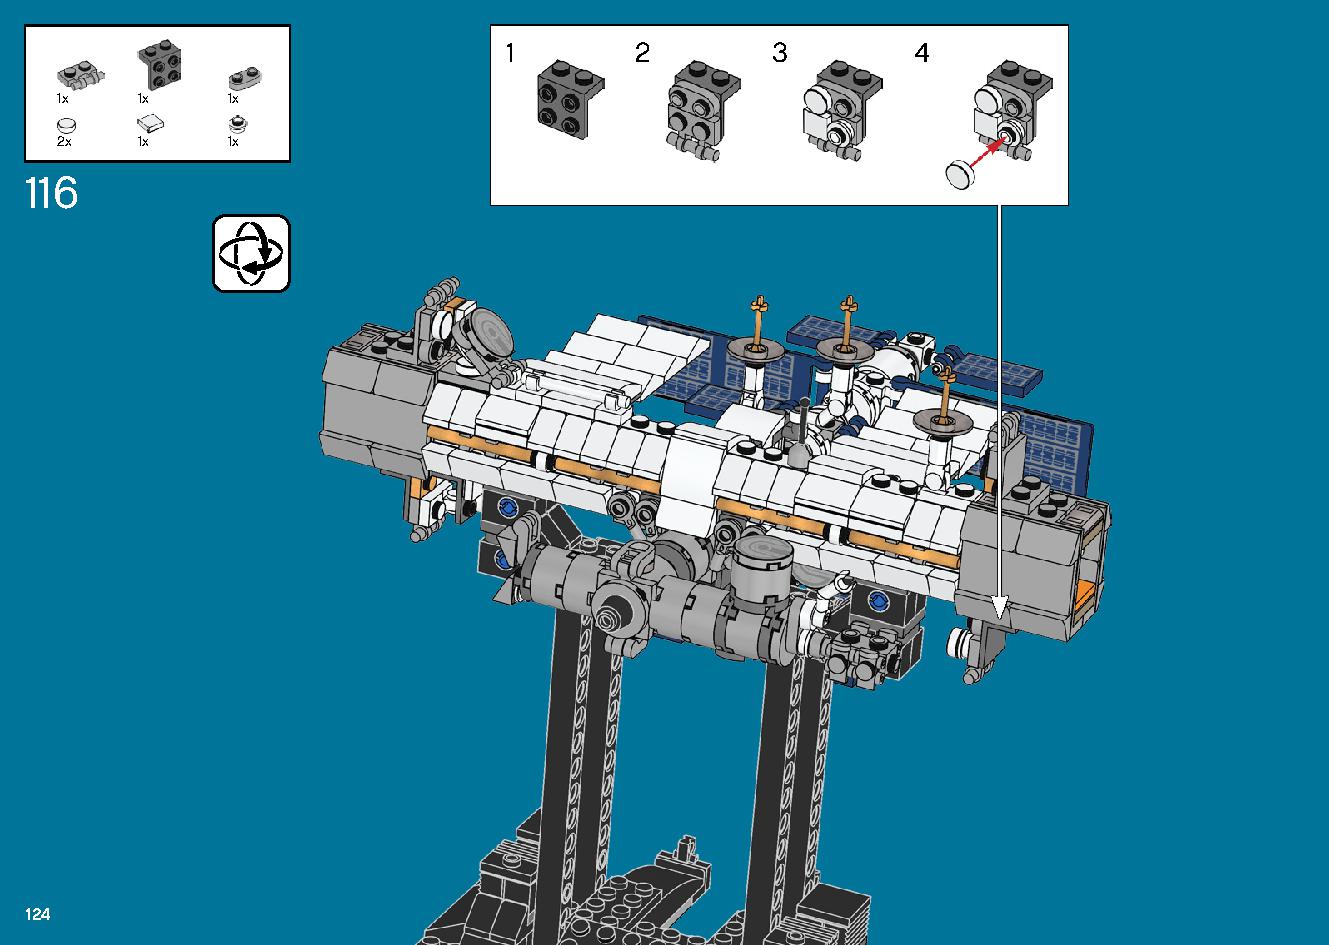 International Space Station 21321 レゴの商品情報 レゴの説明書・組立方法 124 page